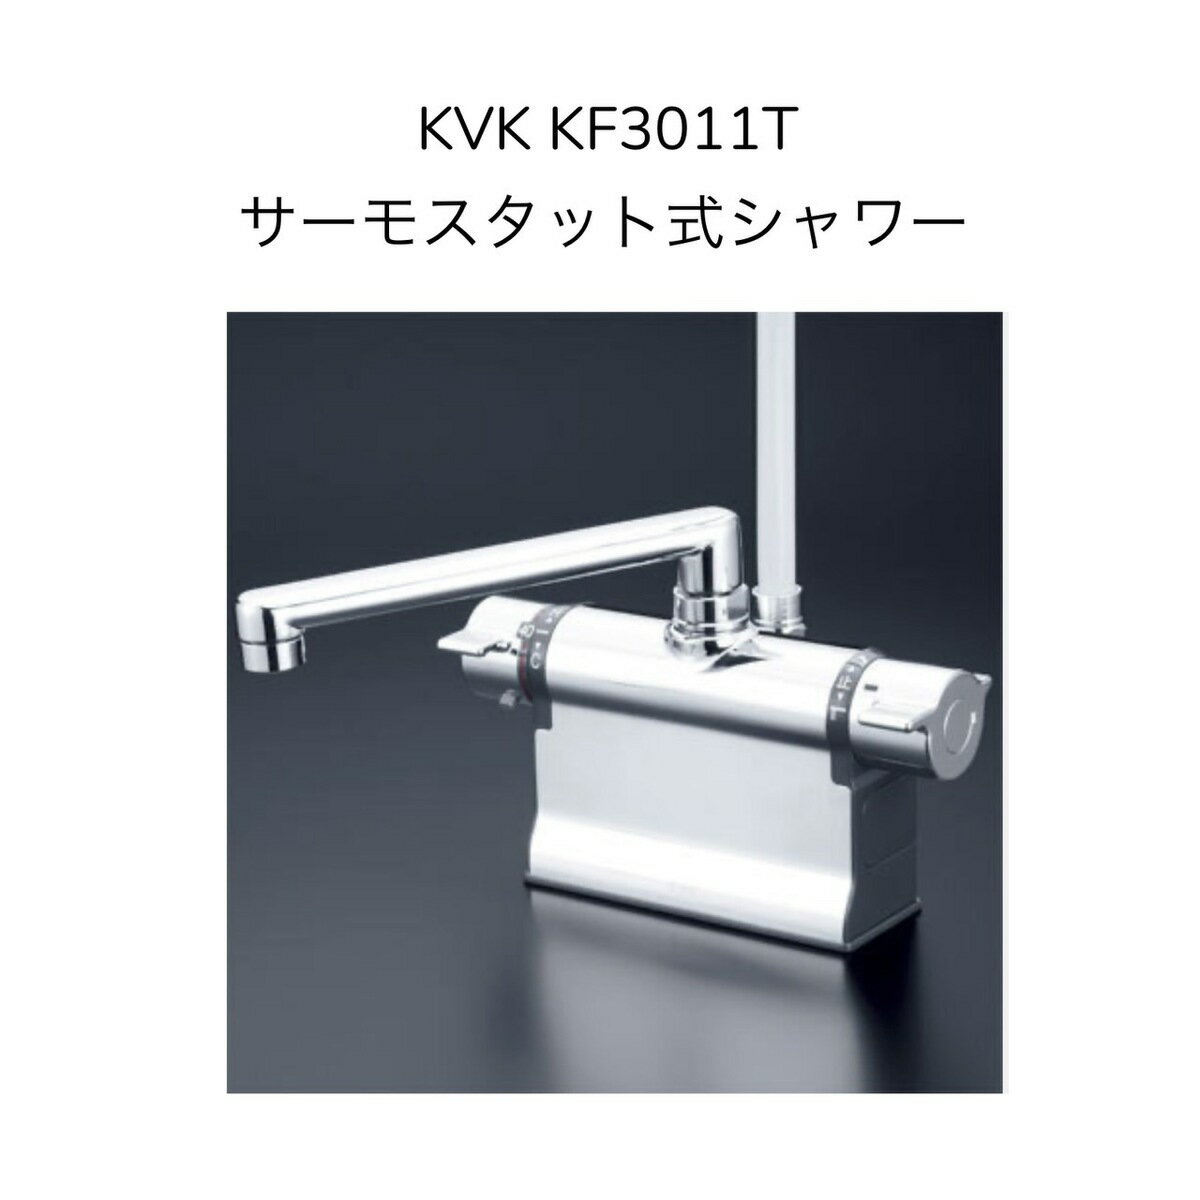 KVK KF3011T デッキ型サーモスタット式シャワー 190mmパイプ付 取付穴径φ23~27対応 取付ピッチ85・100・120mm 可変ピッチタイプ シャワーホースグレー1.45m グレーハンガー 混合水栓 湯水